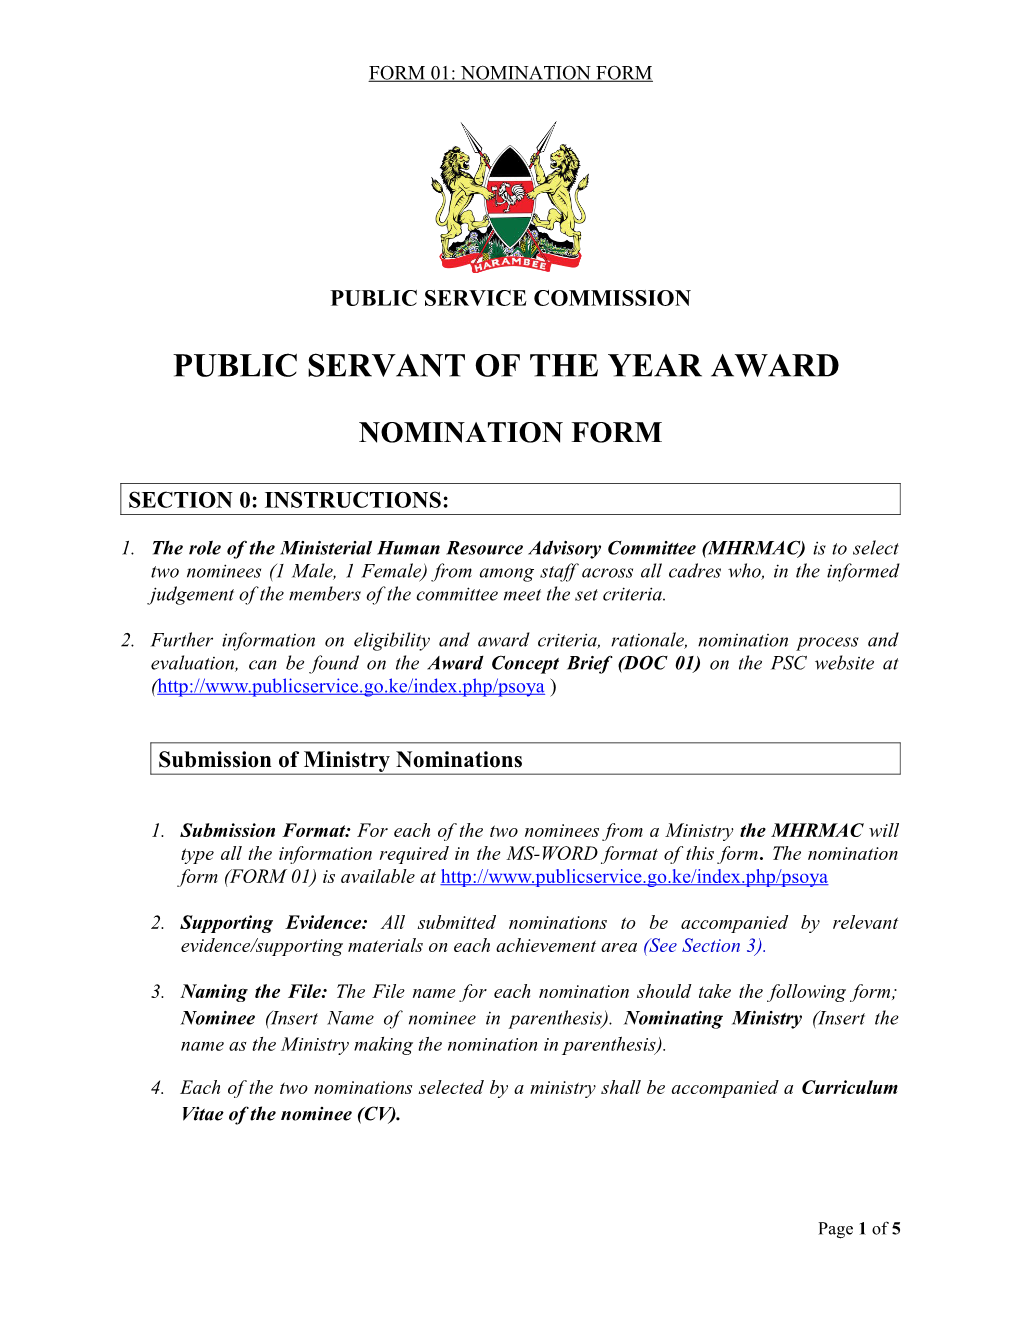 Public Servant of the Year Award